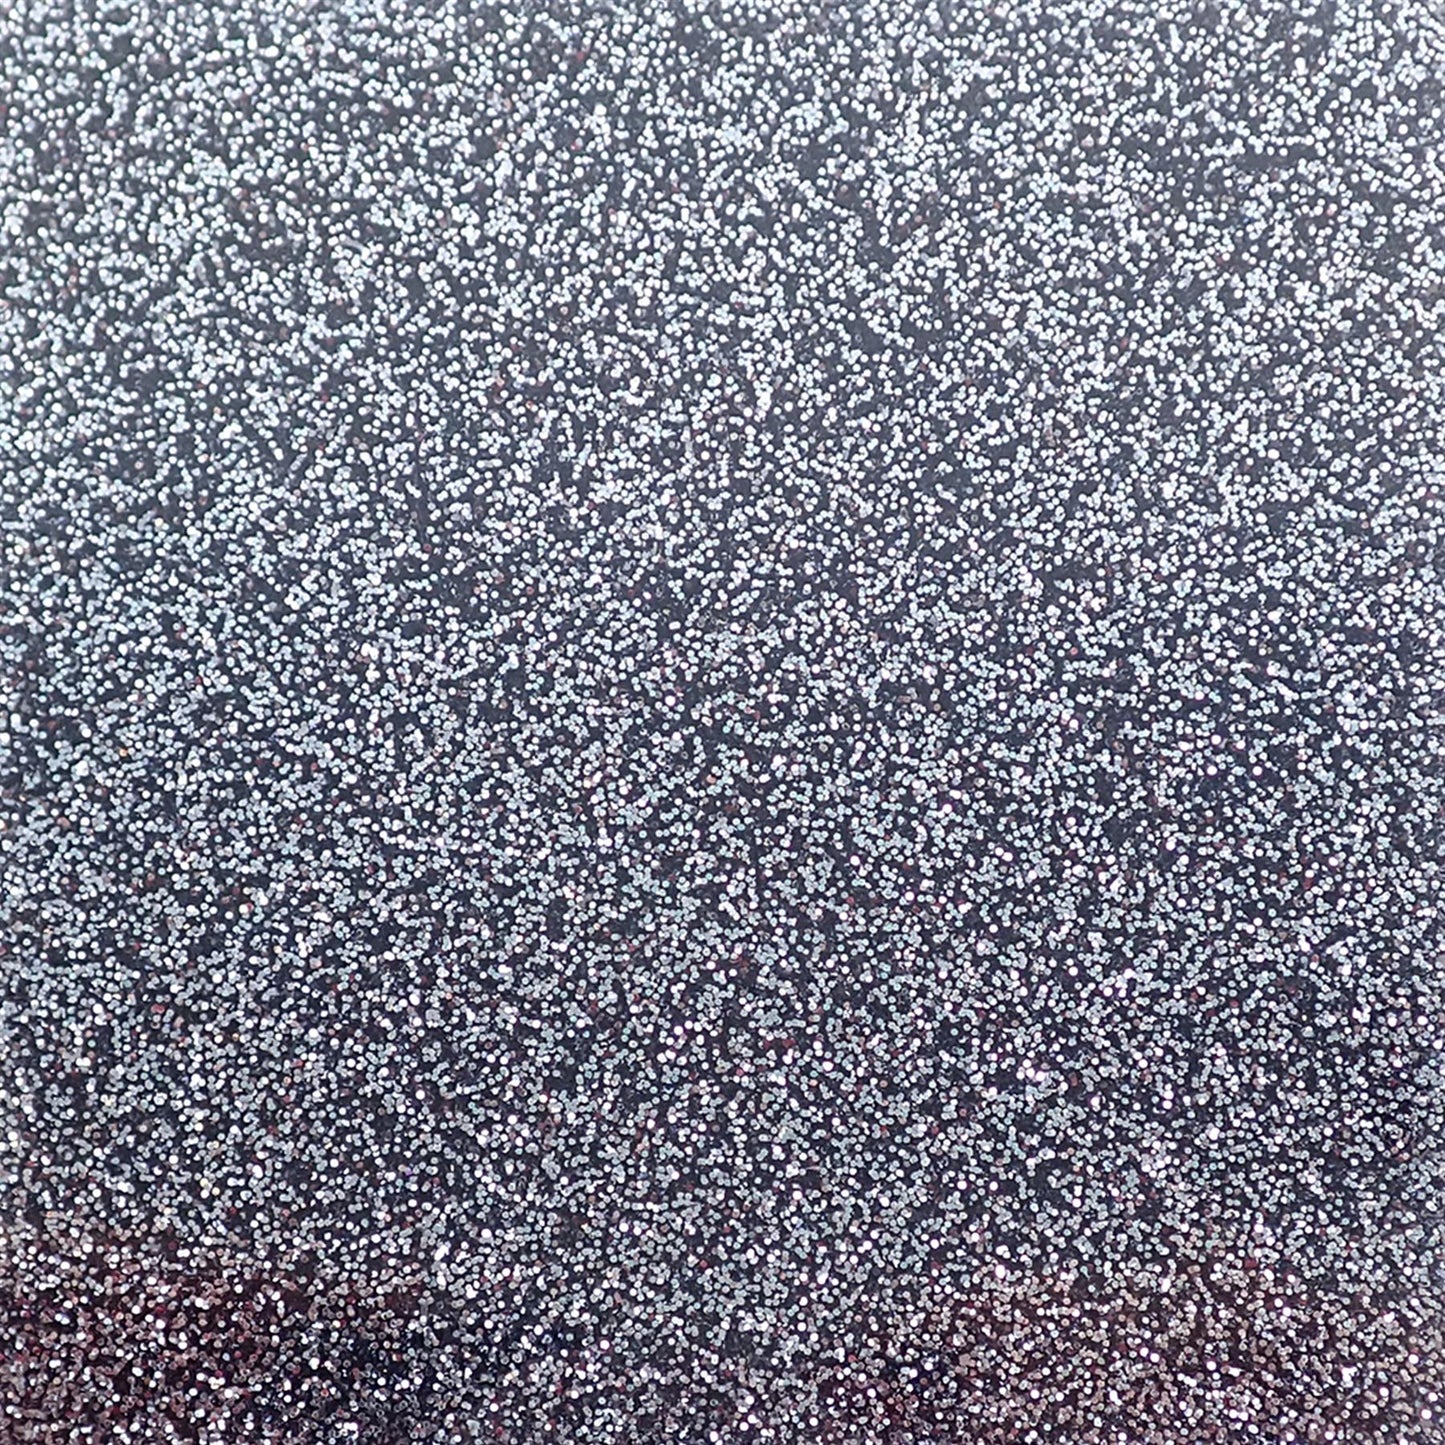 Incudo Dark Grey 2-Sided Glitter Acrylic Sheet - 300x200x3mm (11.8x7.87x0.12")